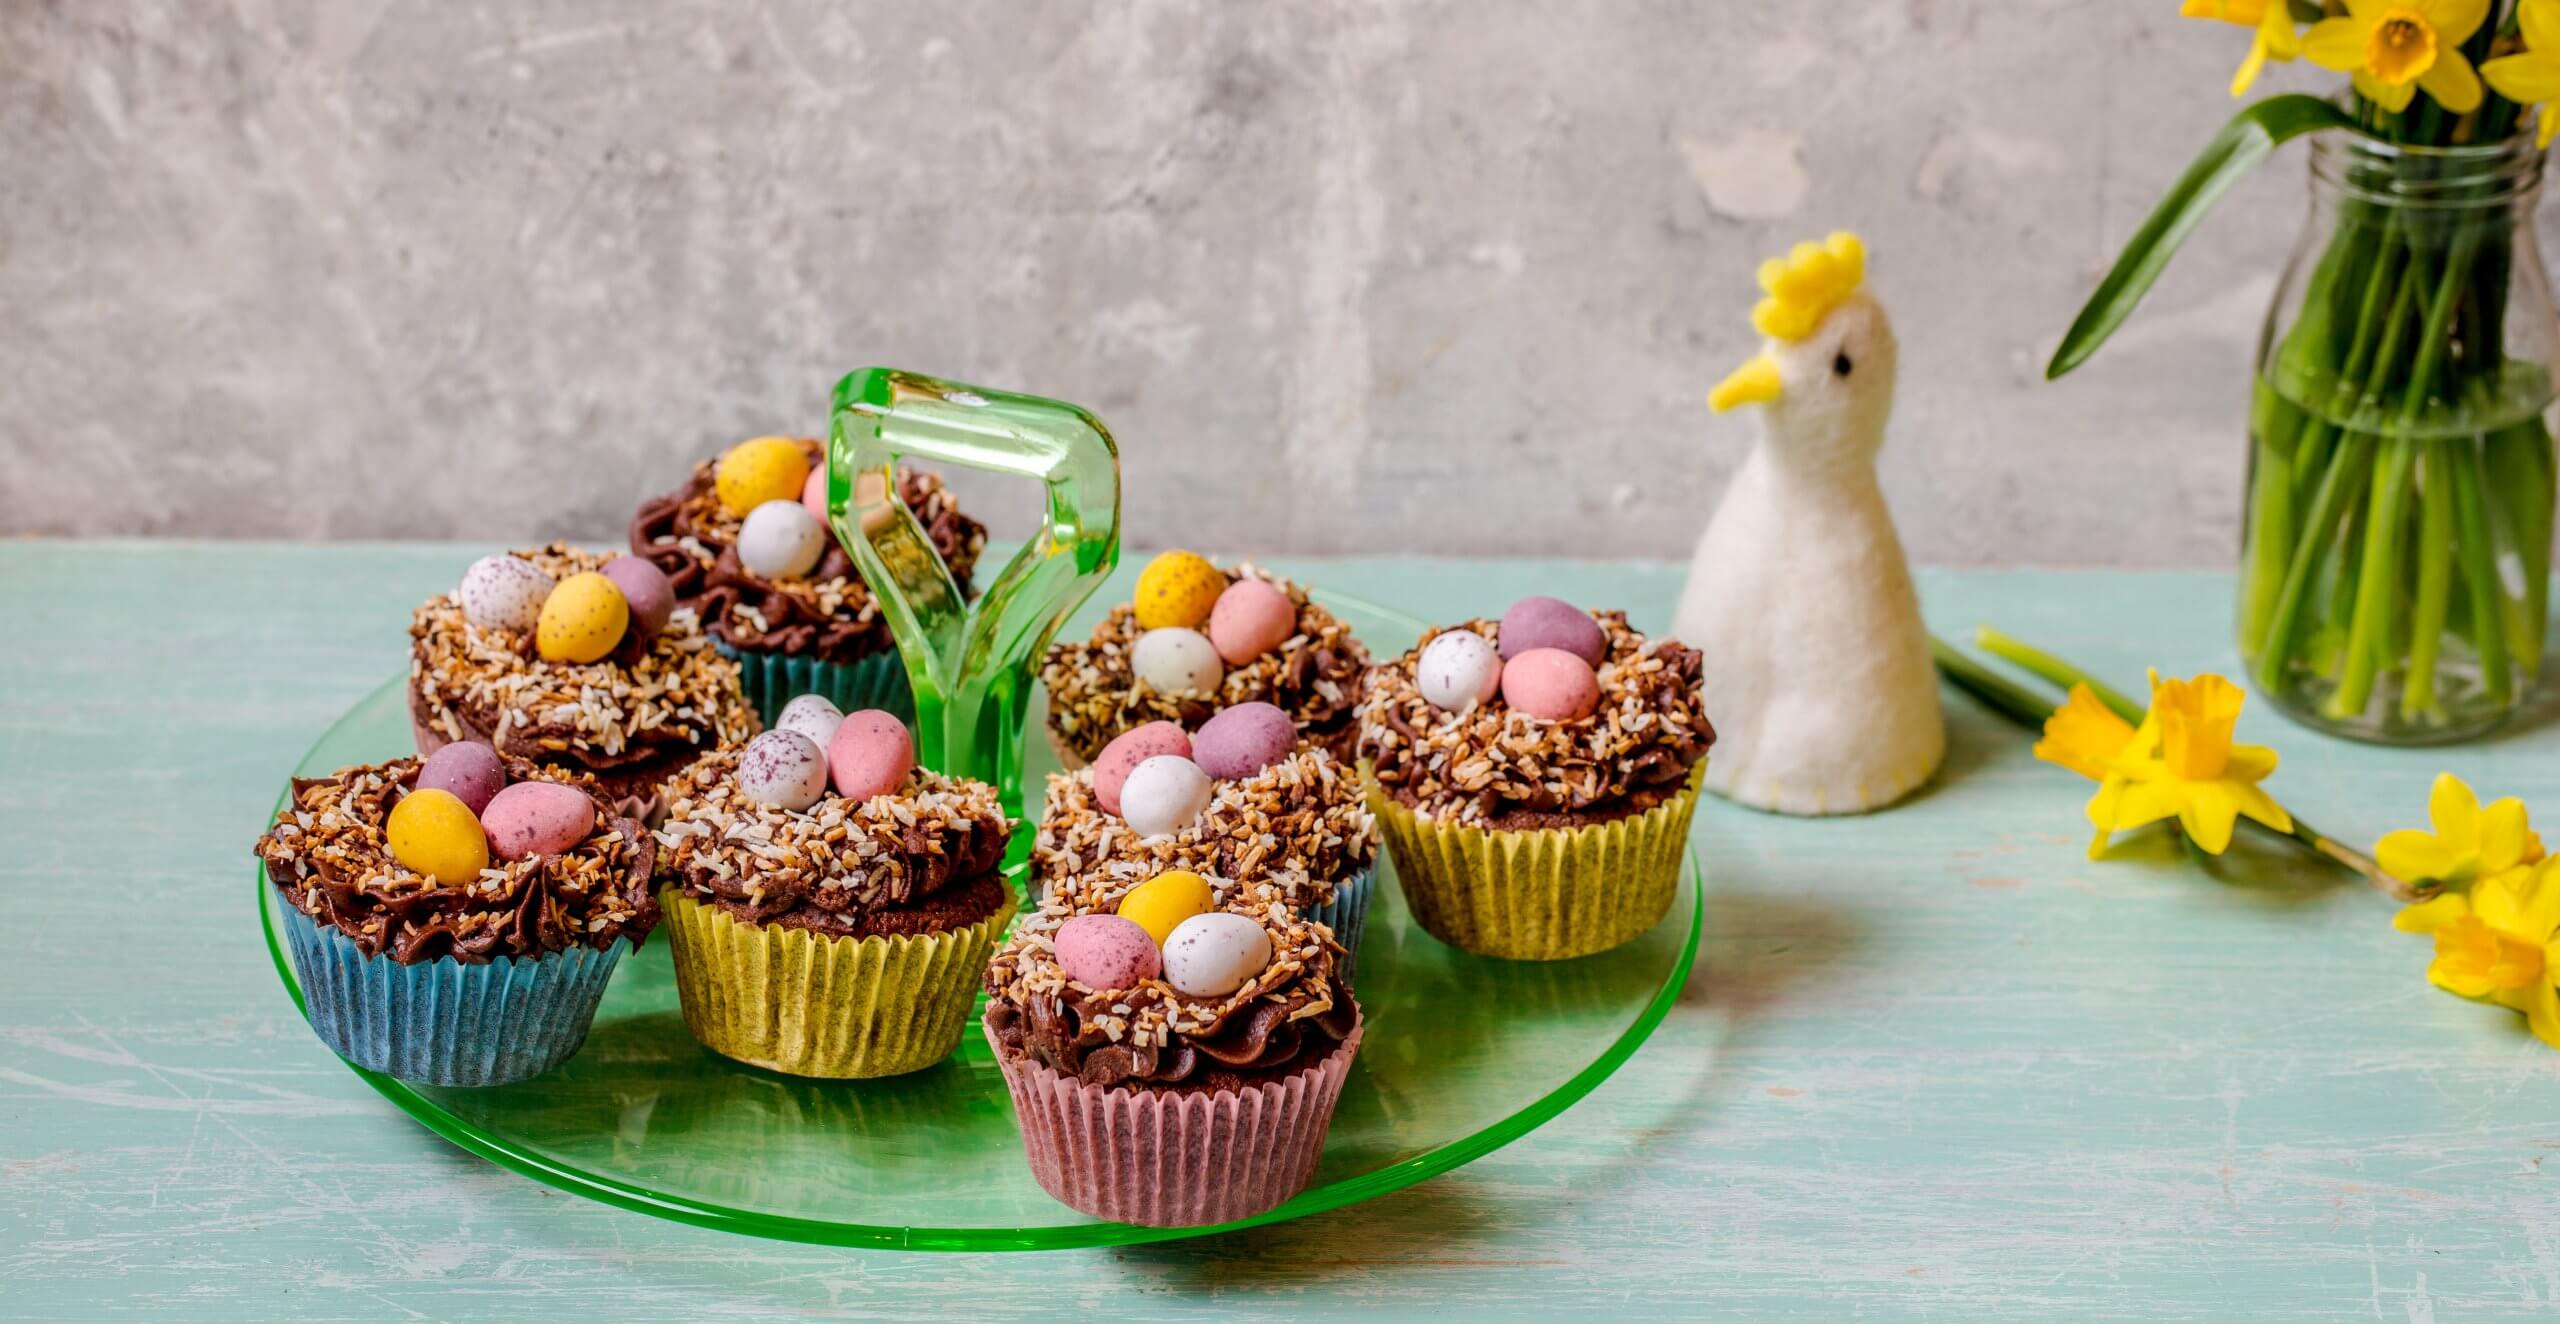 Bird's nest cupcake recipe